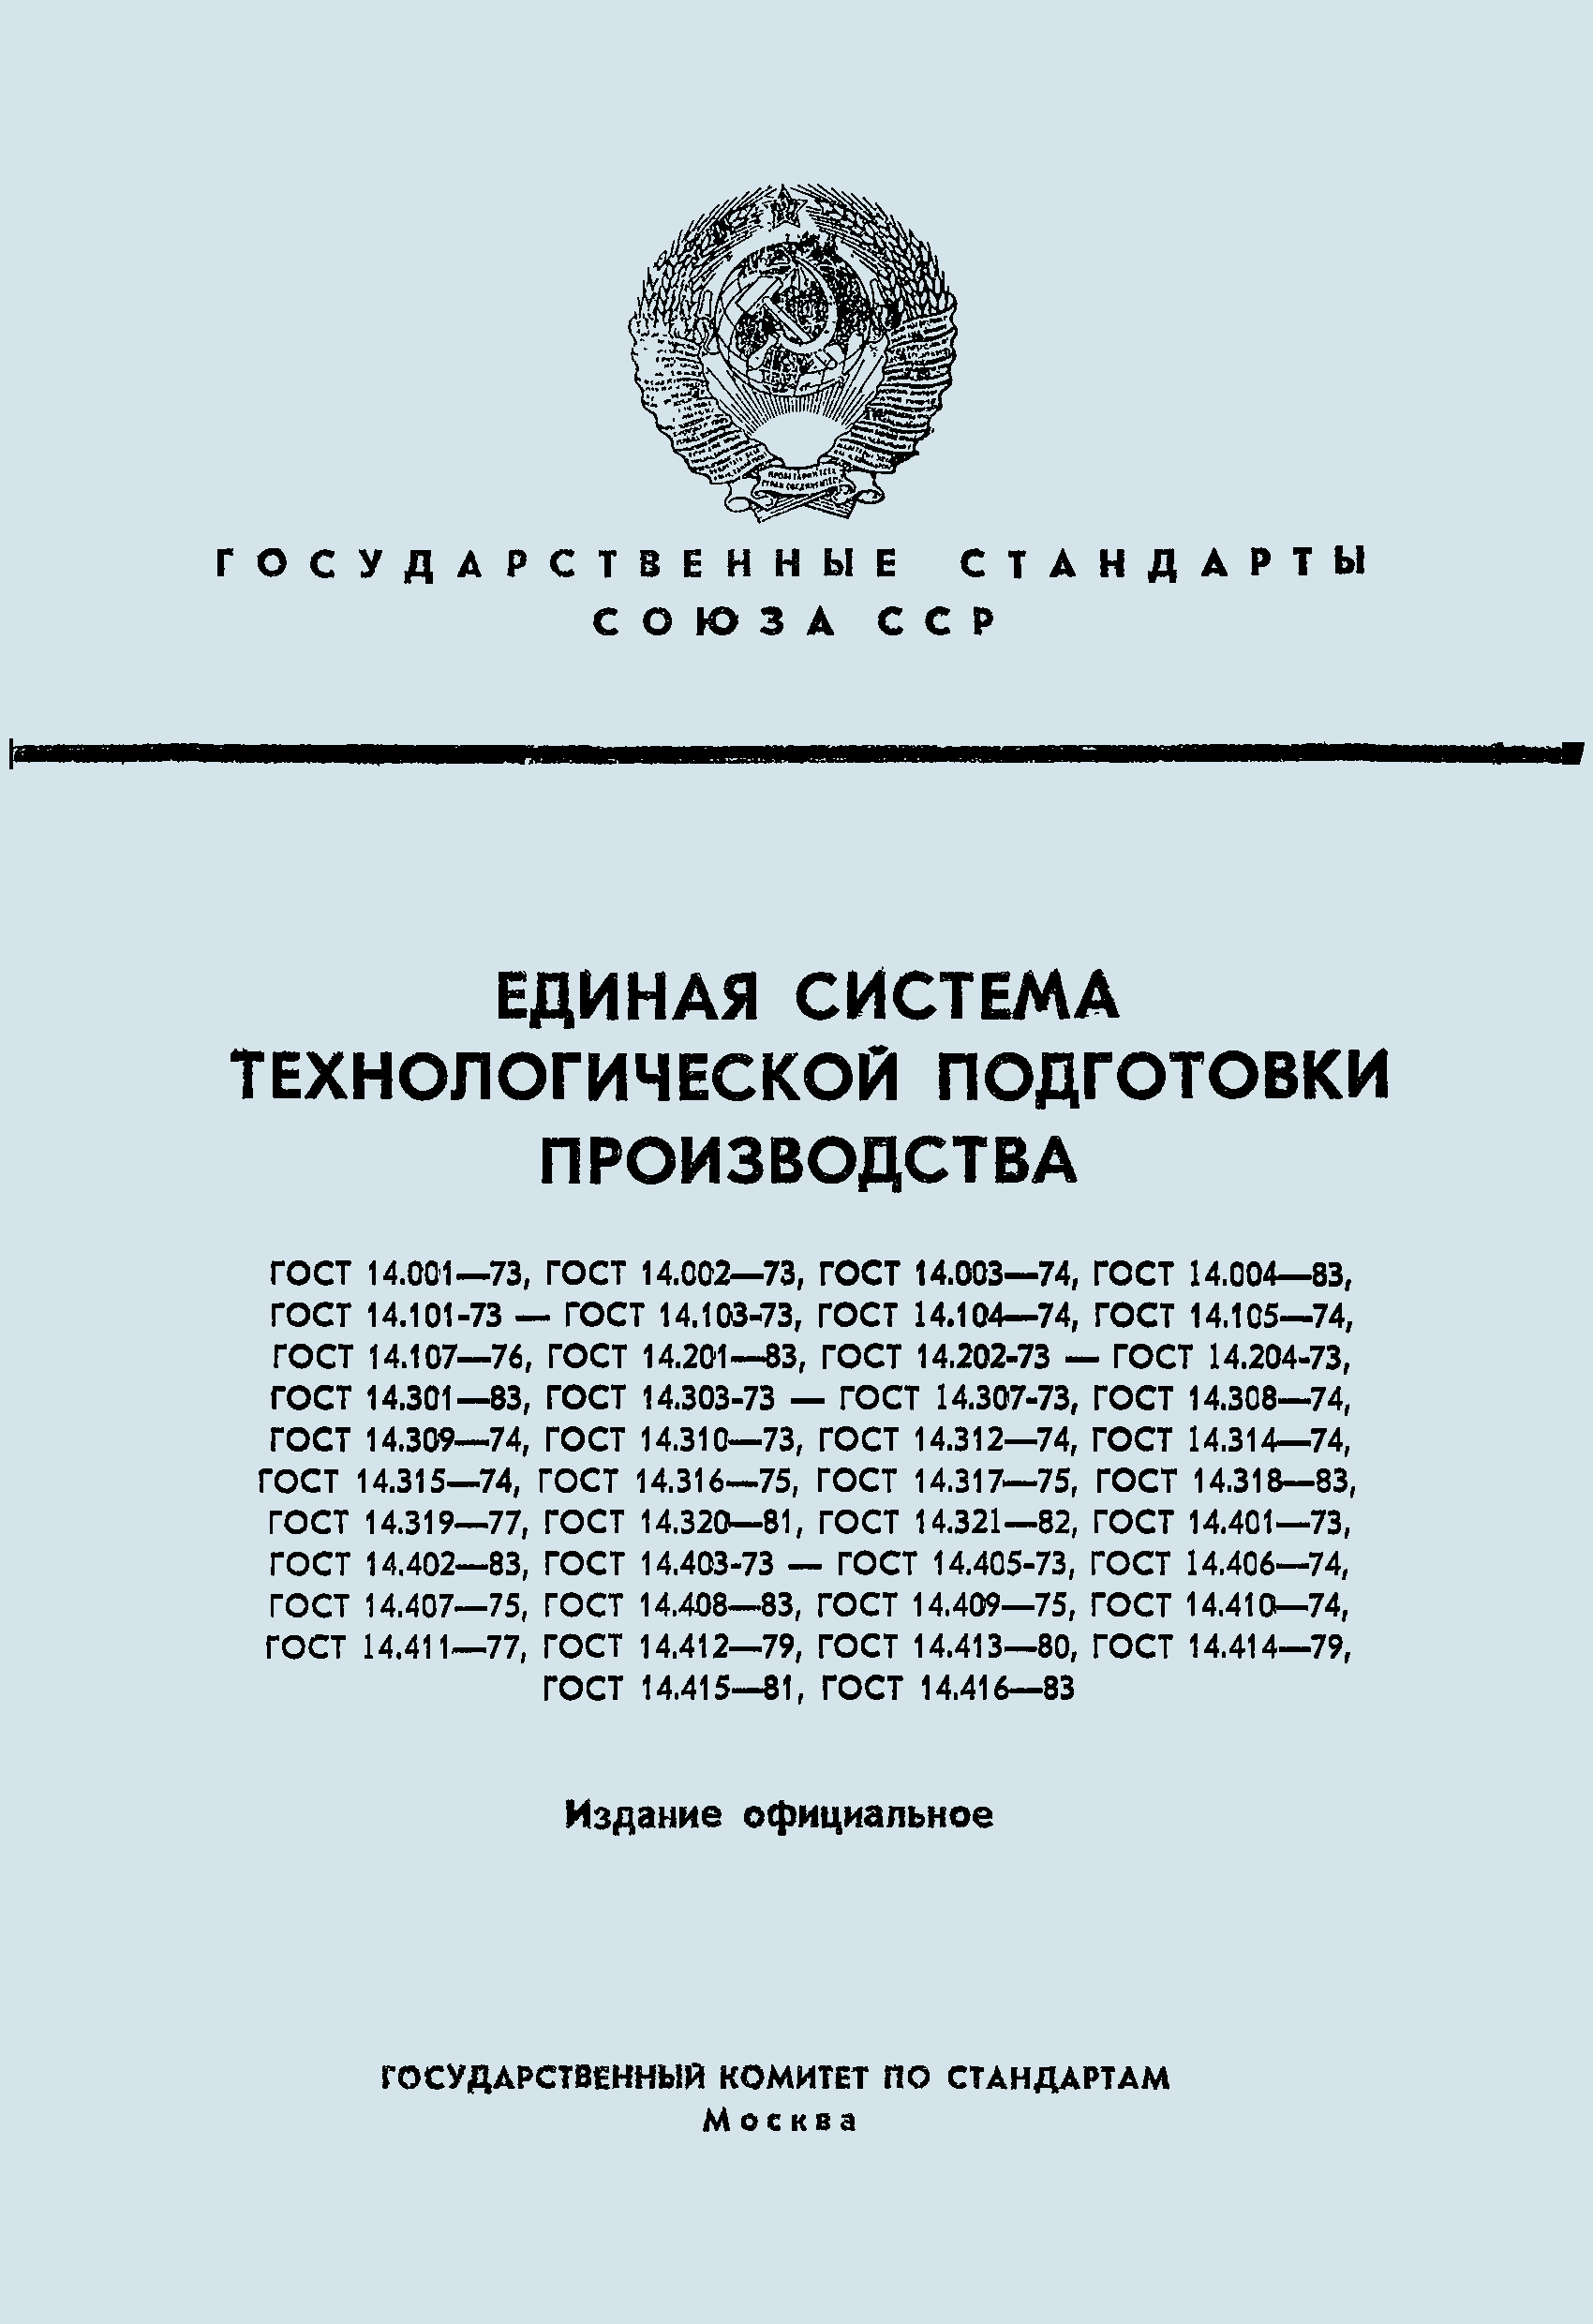 ГОСТ 14.407-75